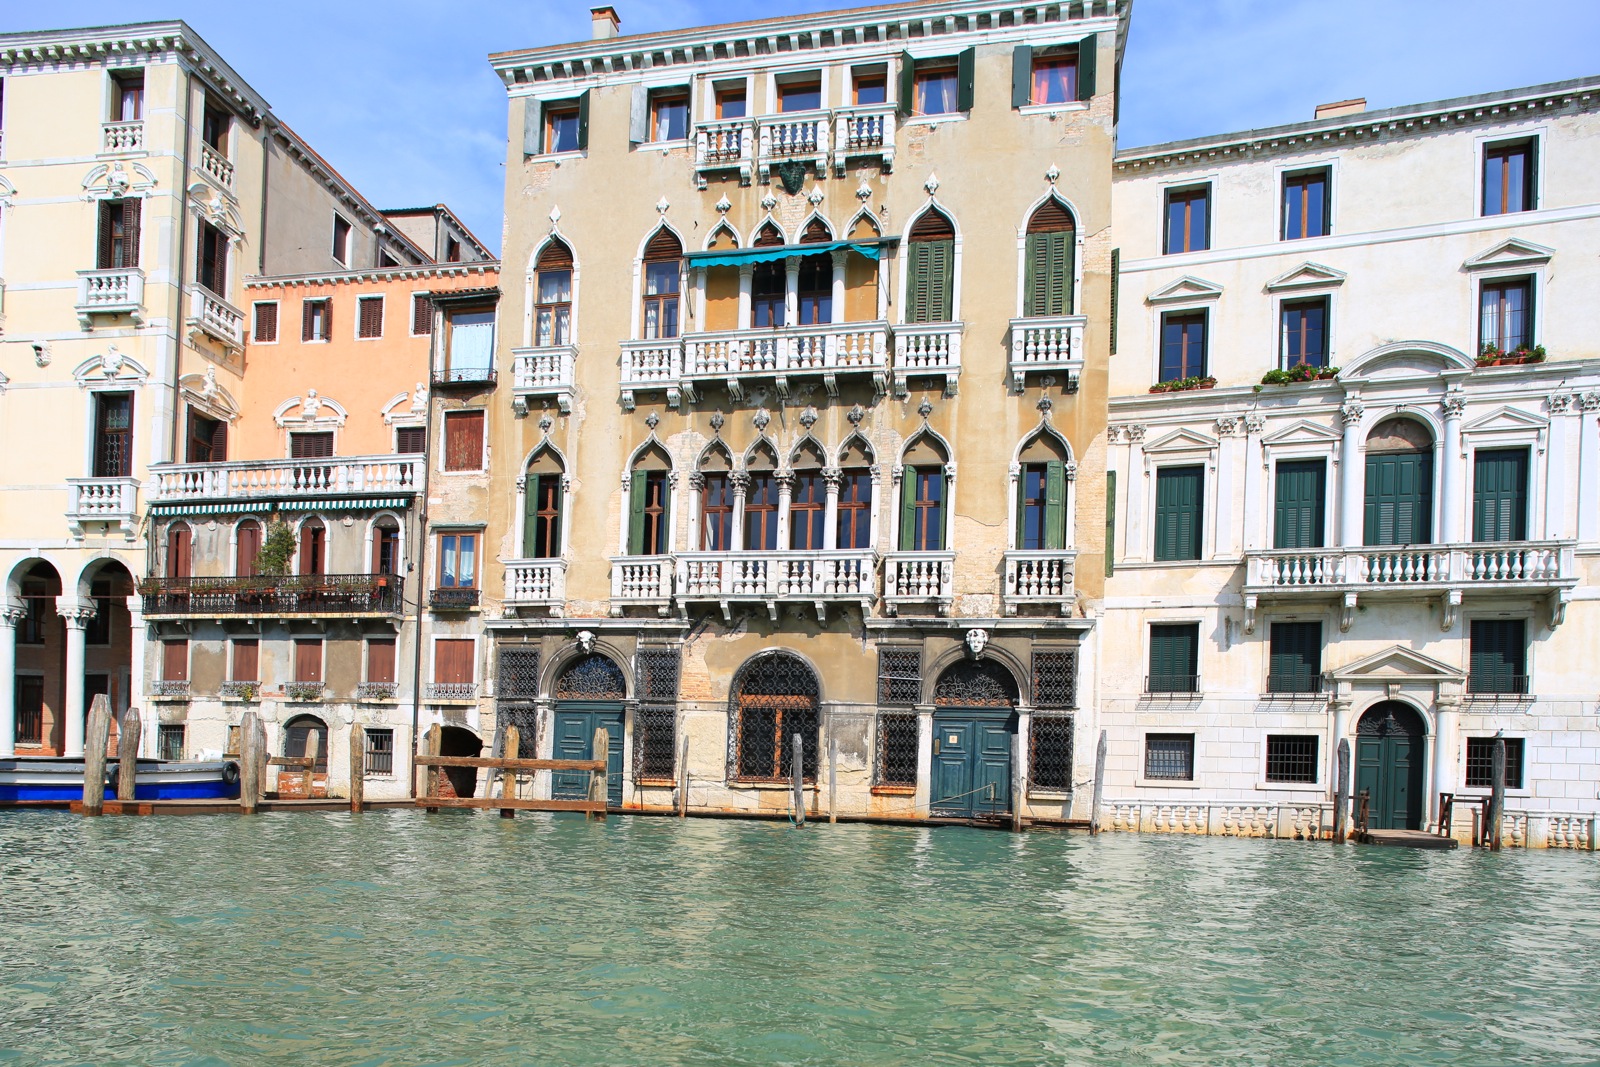 Venice Italy, photo by Darrell Morrison 